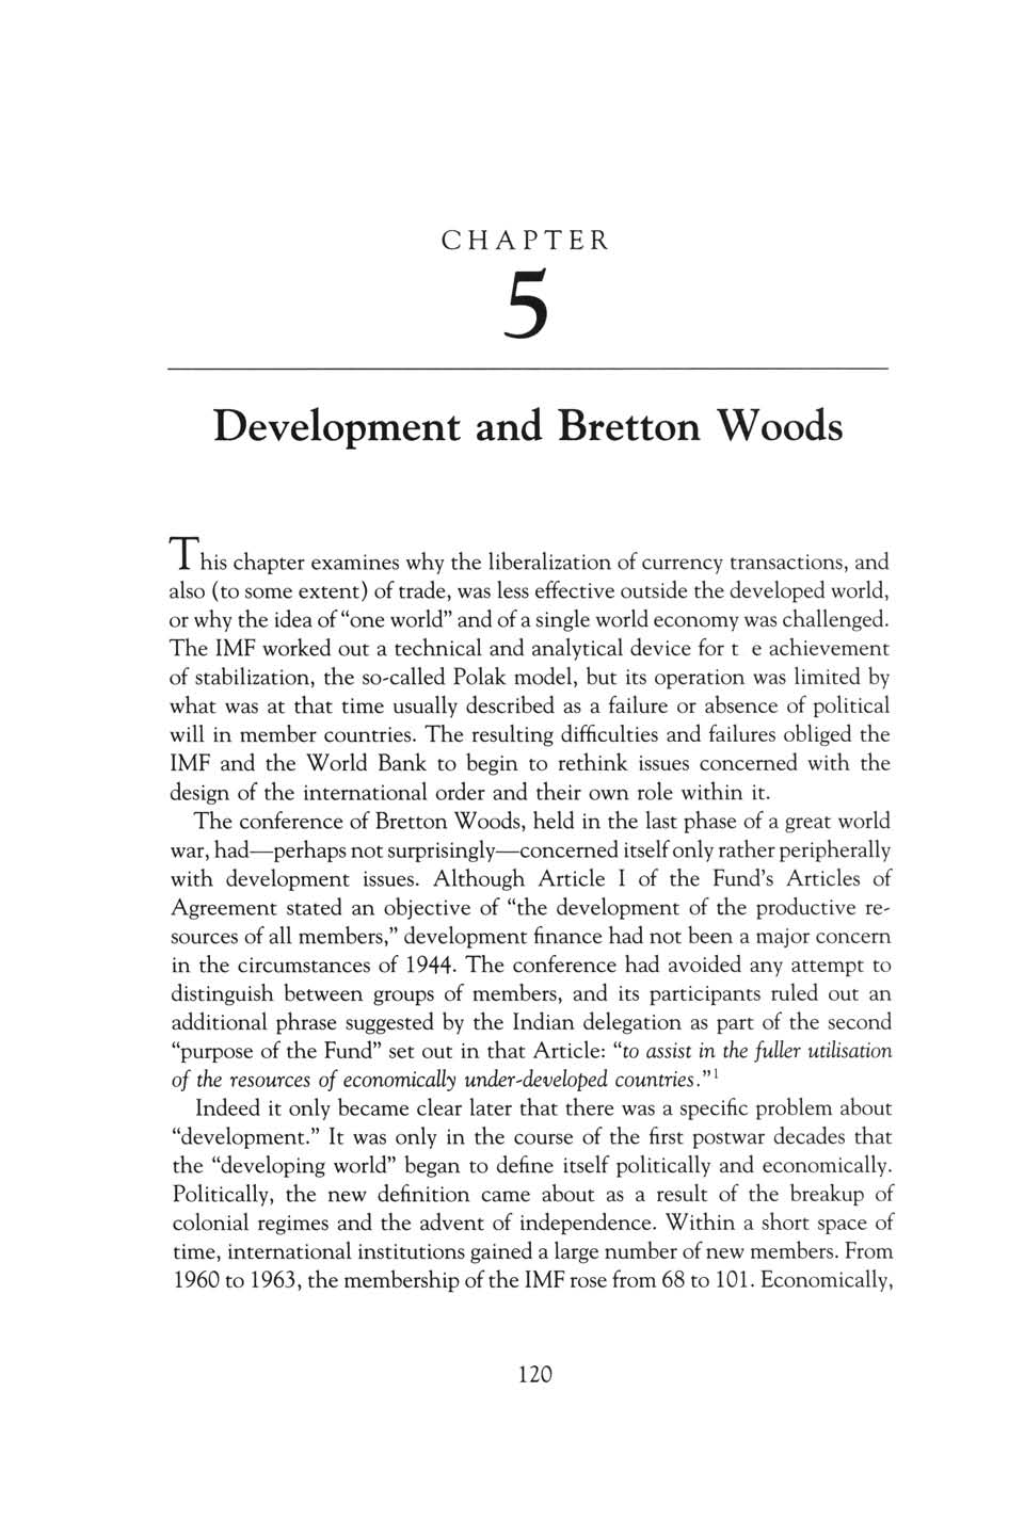 Development and Bretton Woods